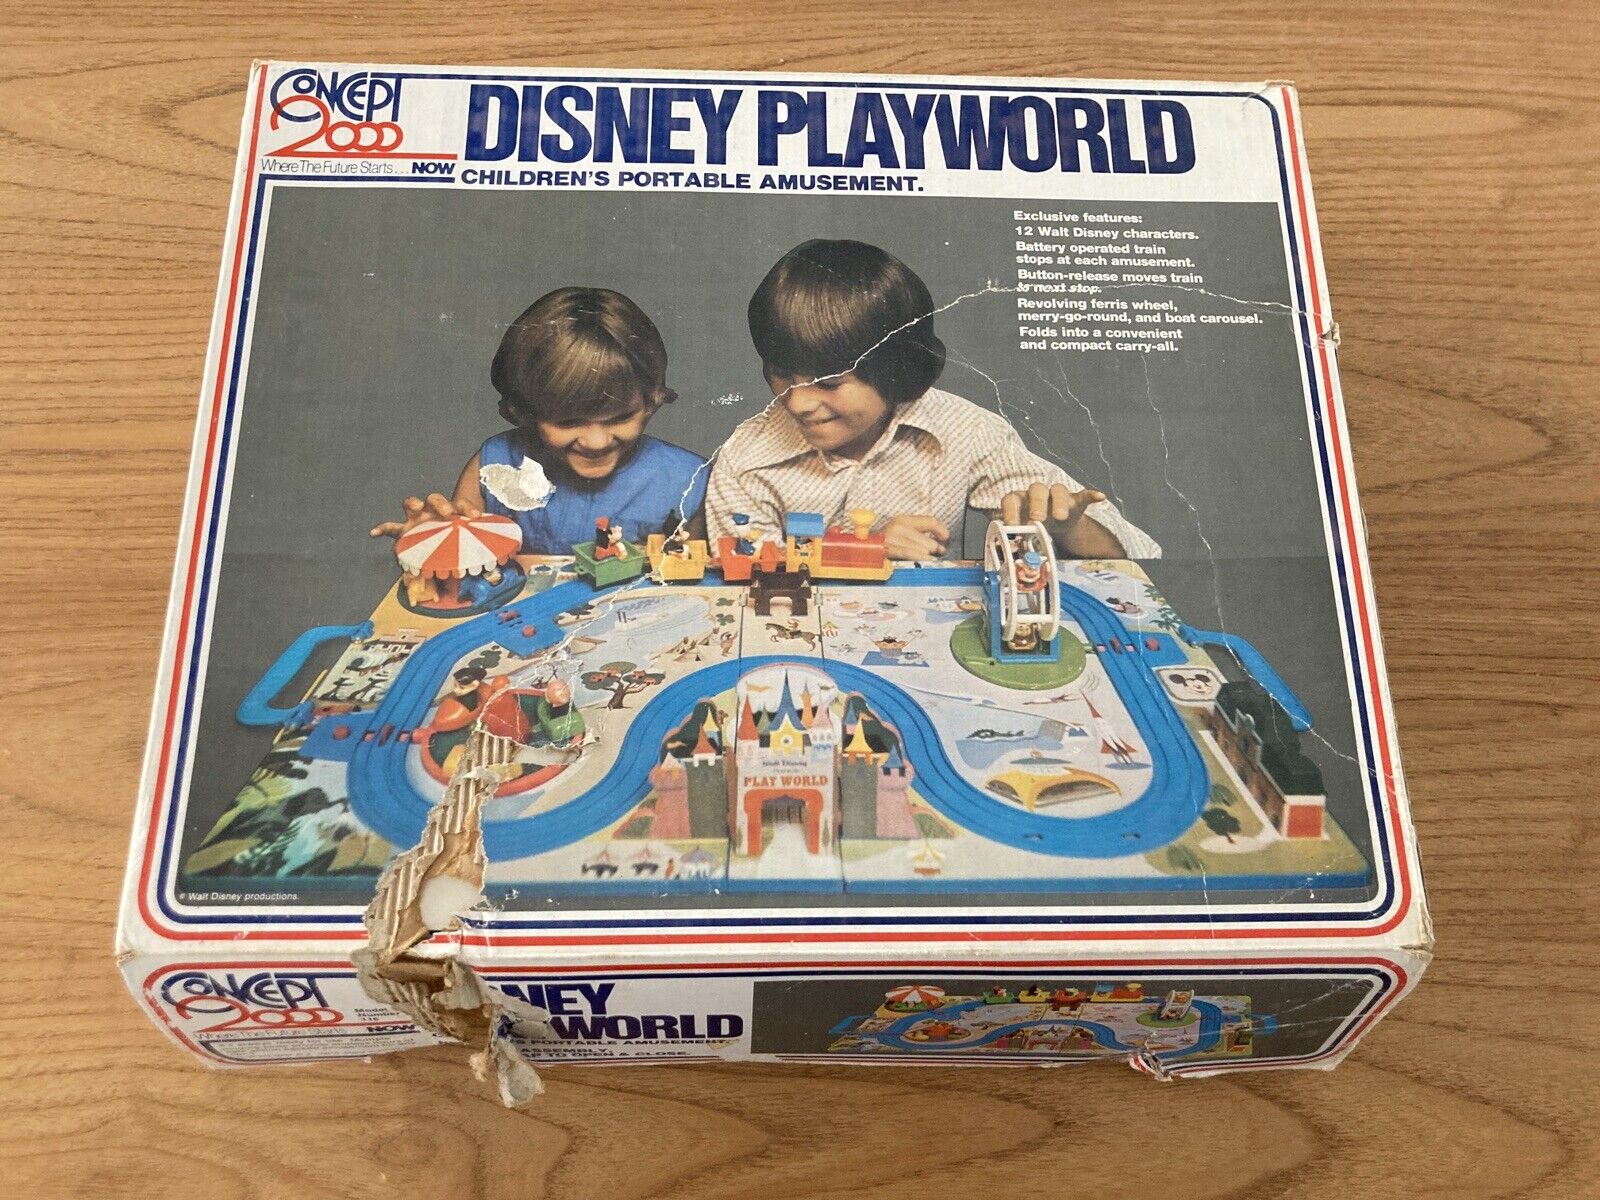 Vintage 1970s Concept 2000 Disney Playworld Plastic Fold Up Playset